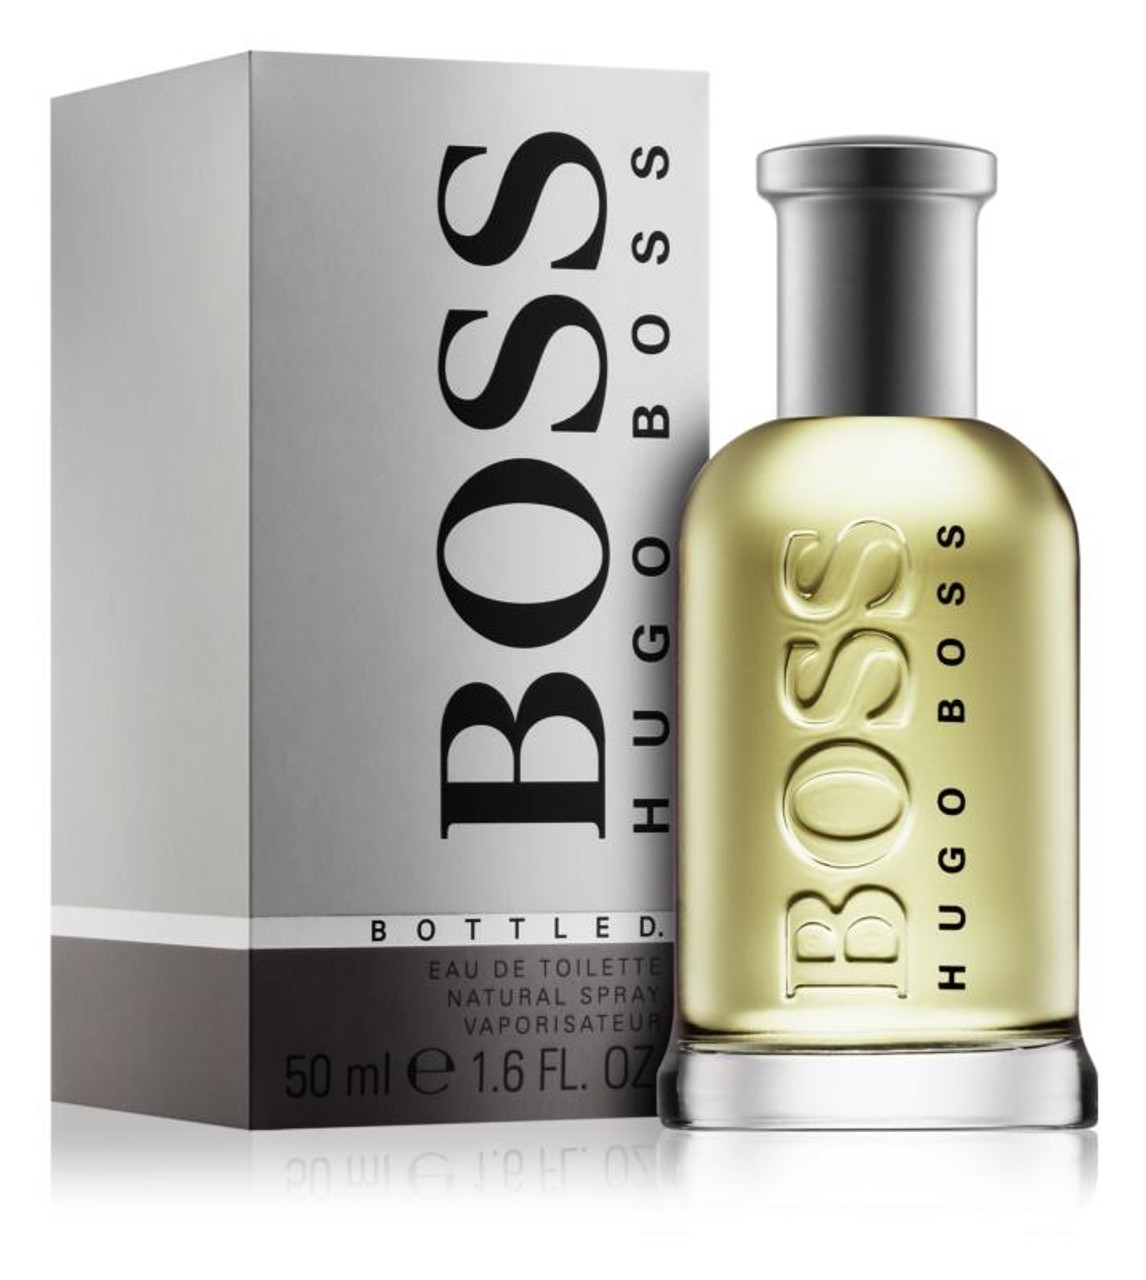 hugo boss 6 perfume españa, enormous deal UP TO 52% OFF - www ...